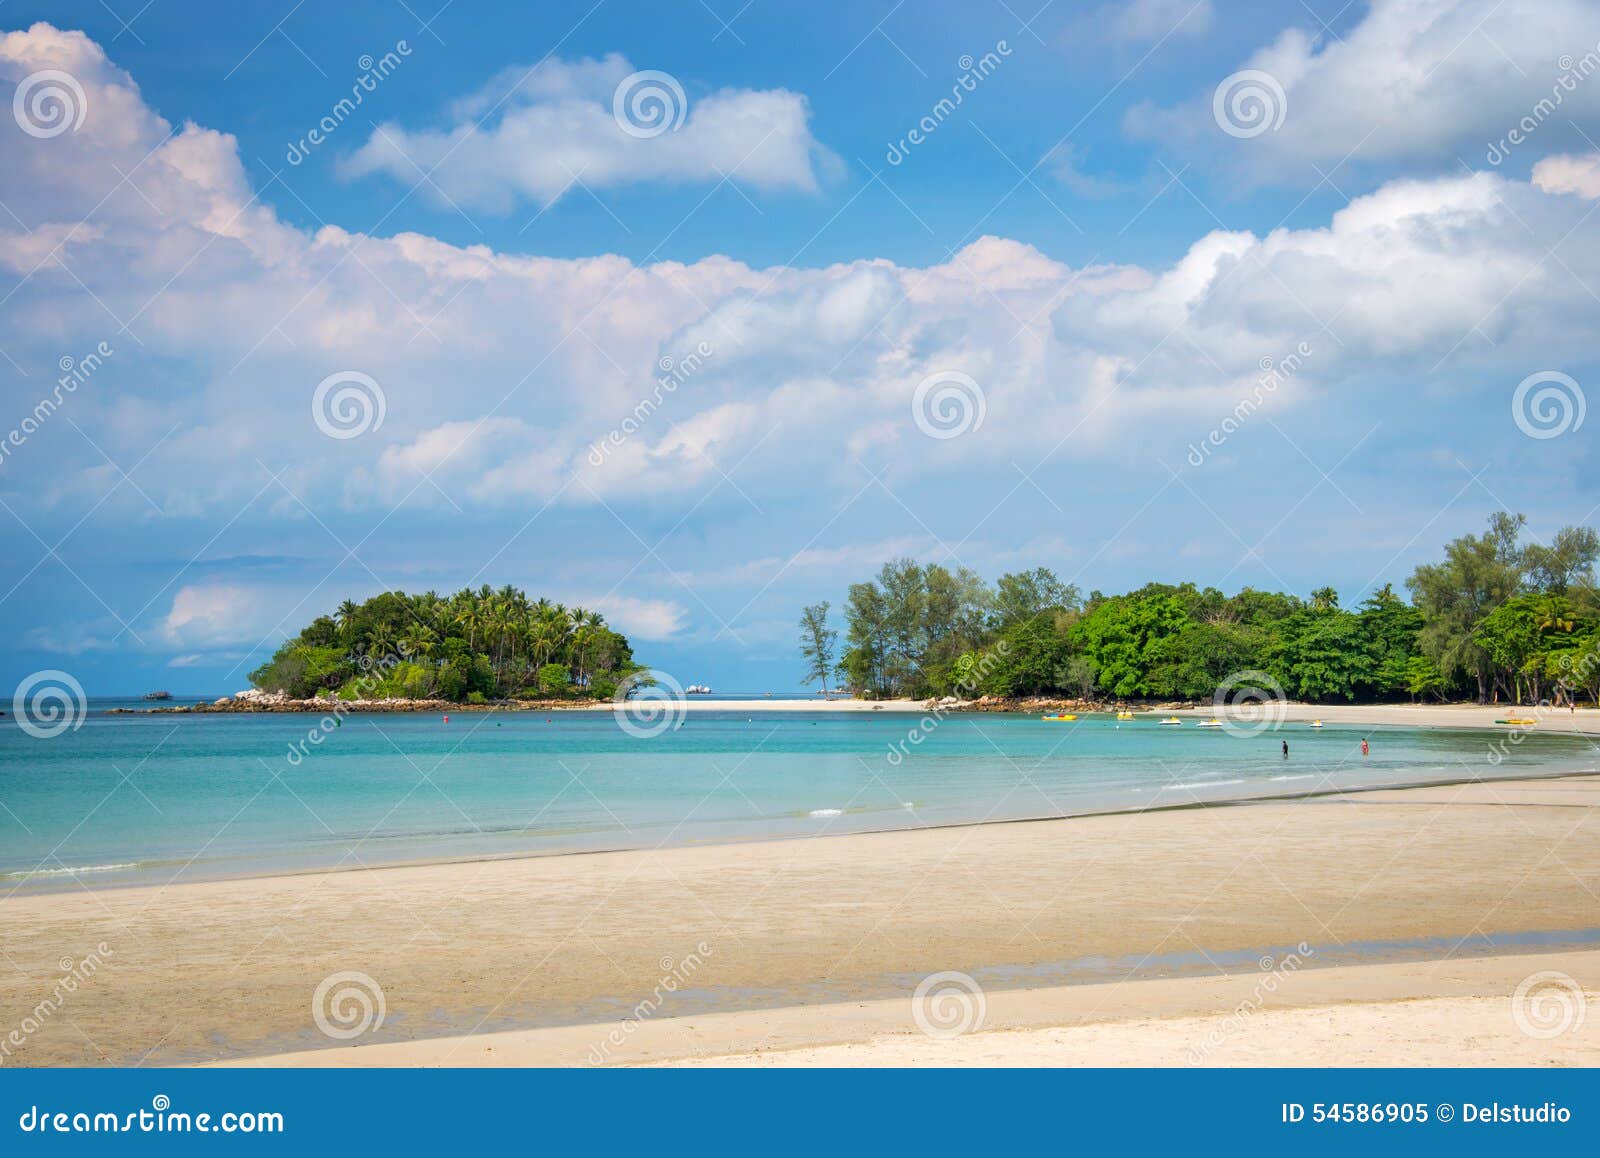 tropical beach on bintan island resorts